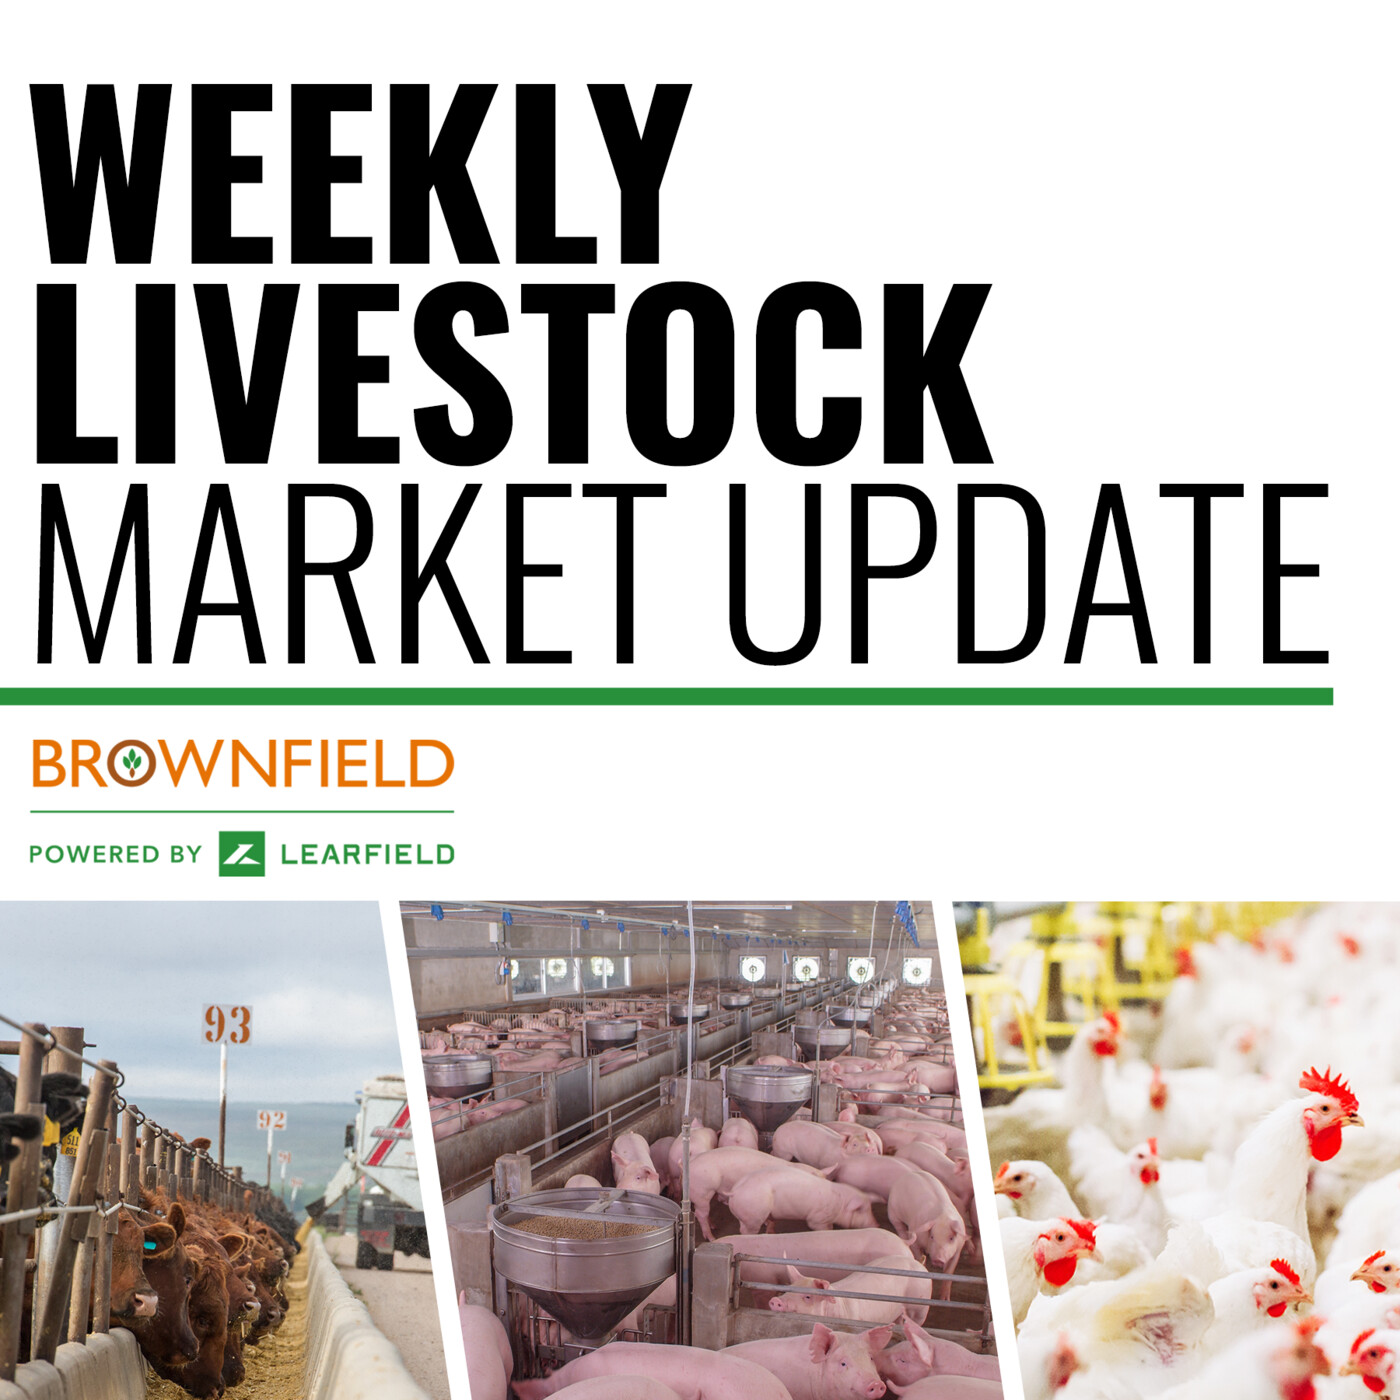 Weekly Livestock Market Update cover art